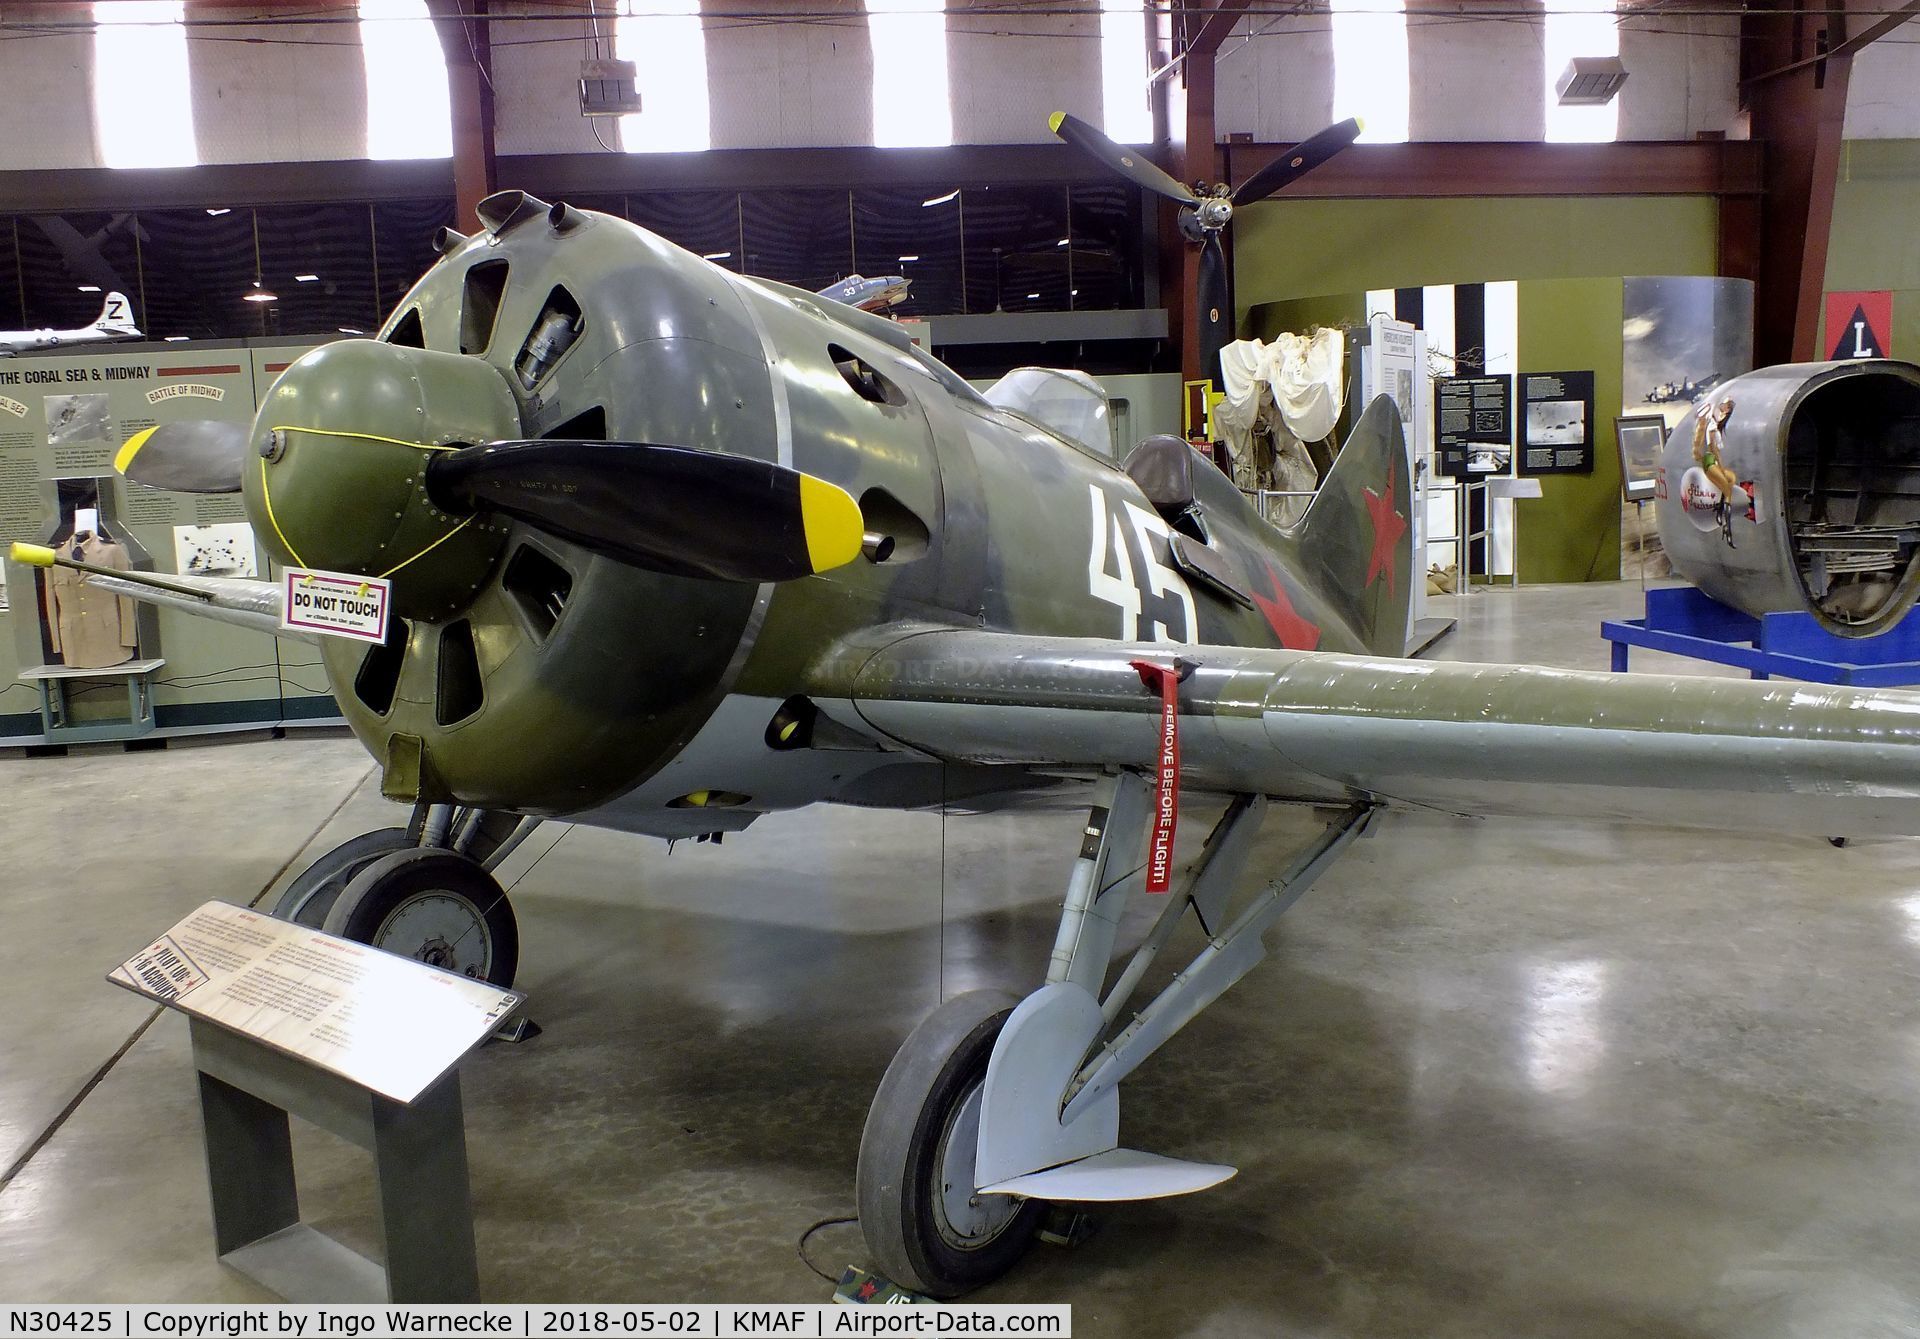 N30425, 1939 Polikarpov I-16 Type 24 C/N 2421645, Polikarpov I-16 Type 24 at the Midland Army Air Field Museum, Midland TX